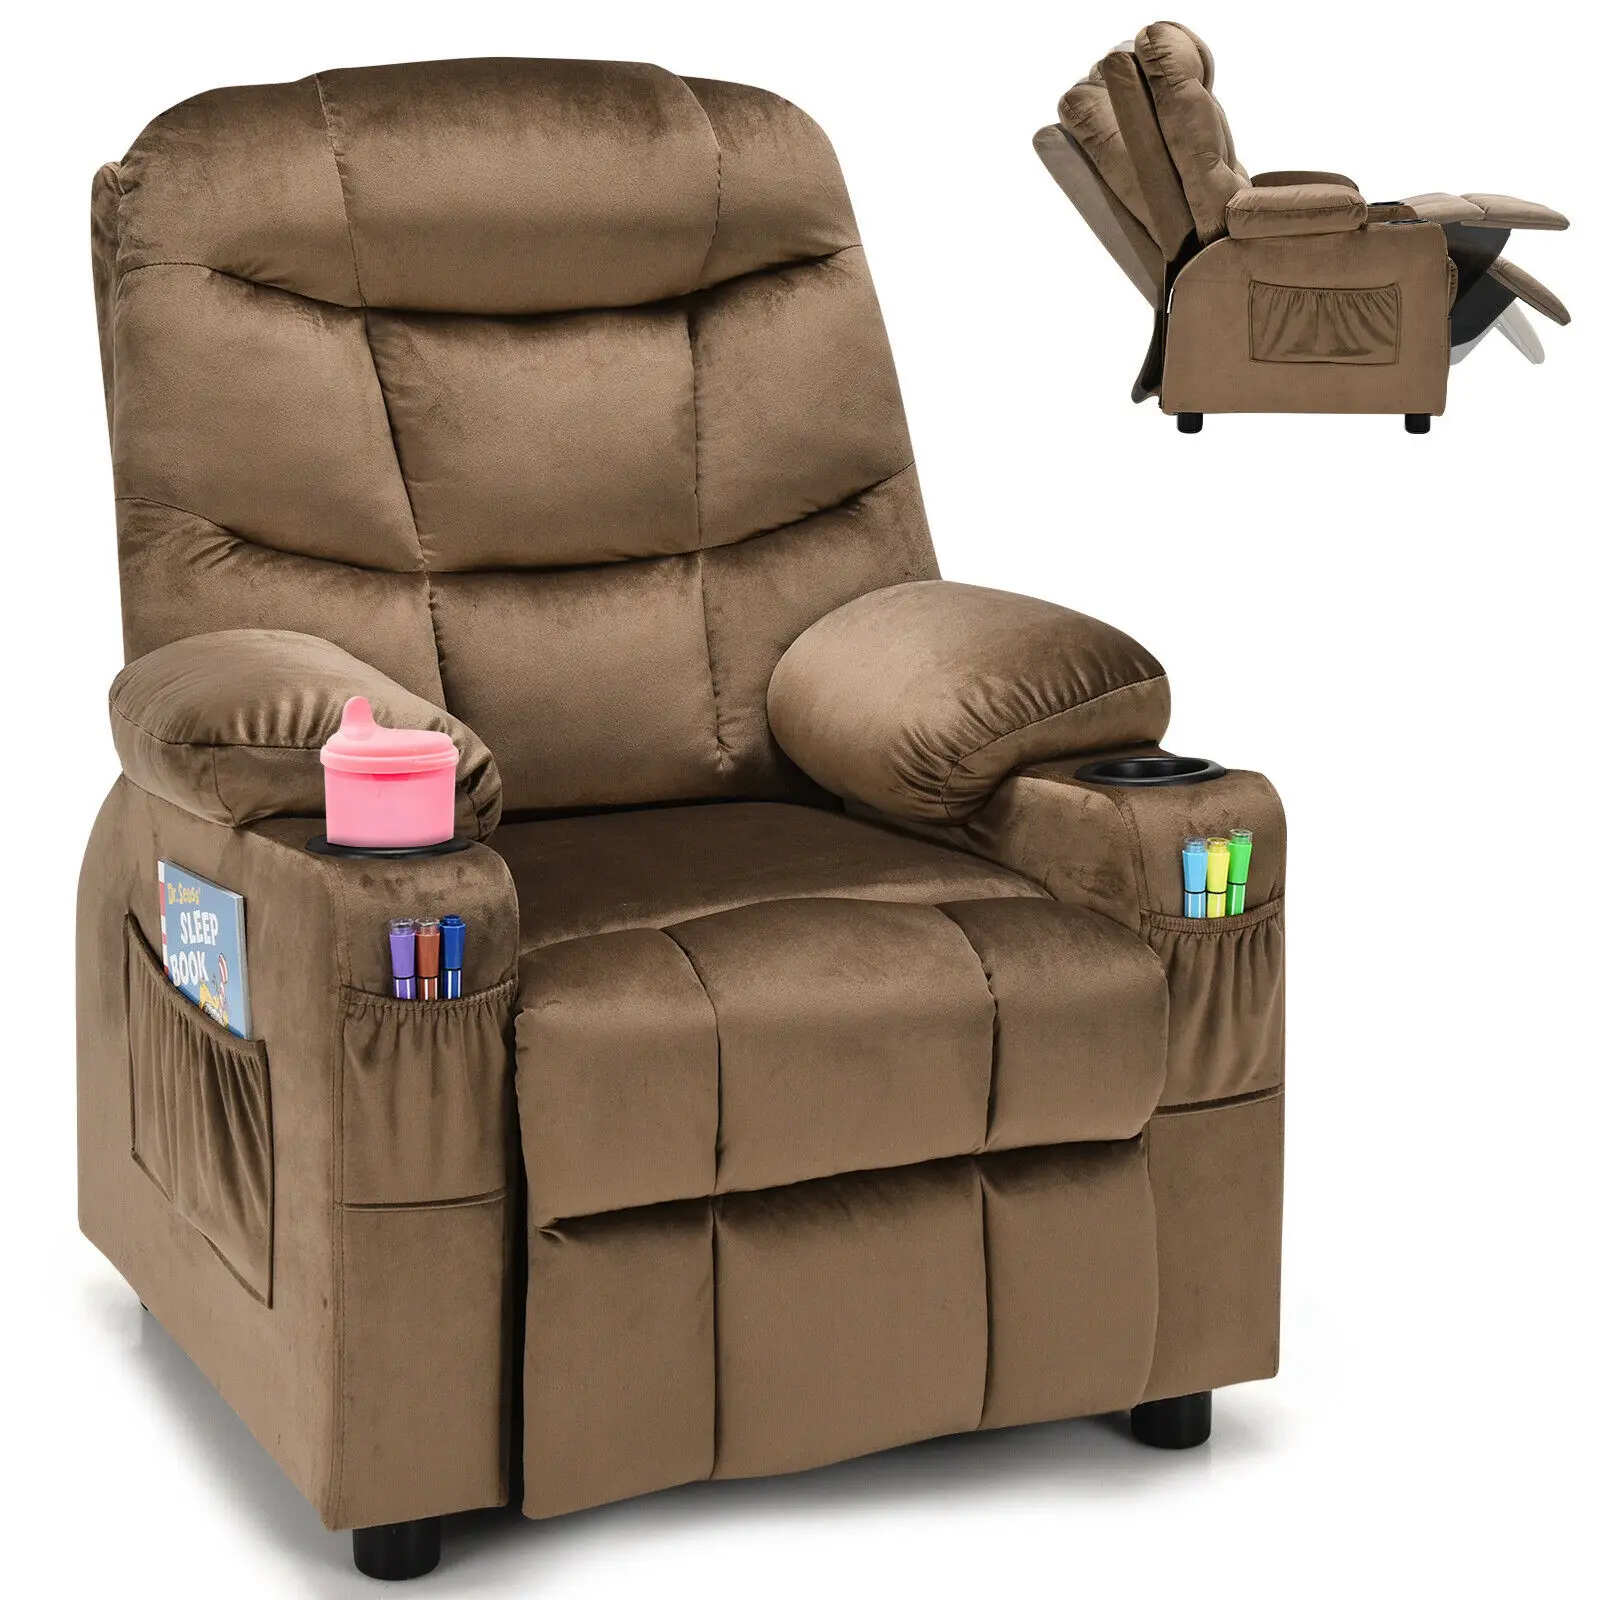 Kids Furniture Kids Sofa Manual Recliner Leather Ergonomic Lounge w/Cup Holder Children Gift Brown 